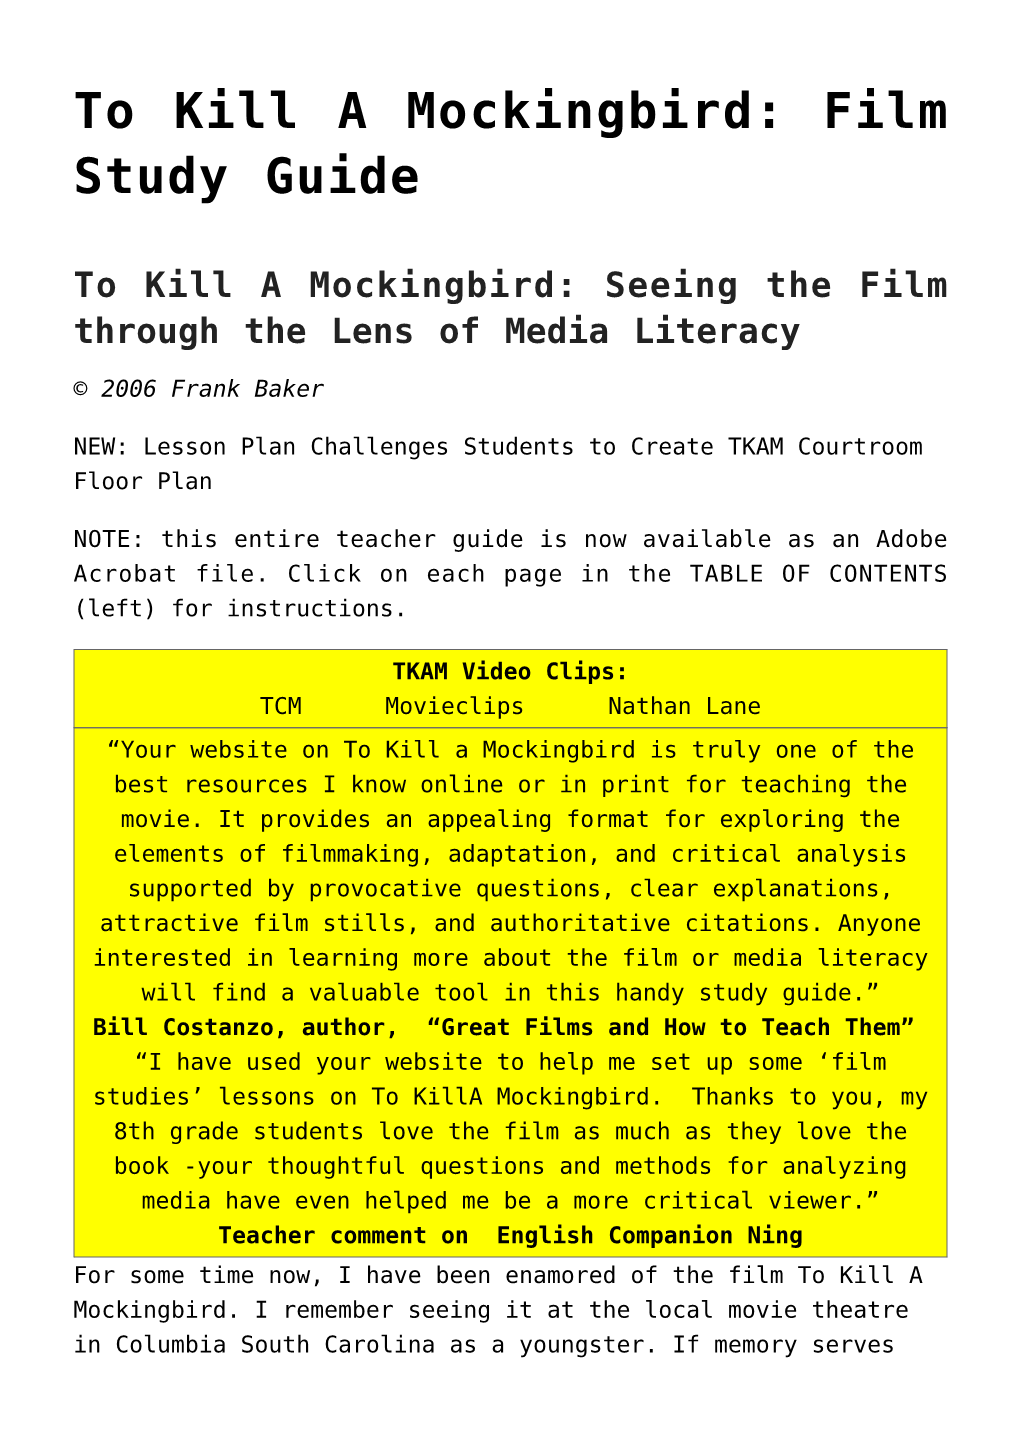 To Kill a Mockingbird: Film Study Guide